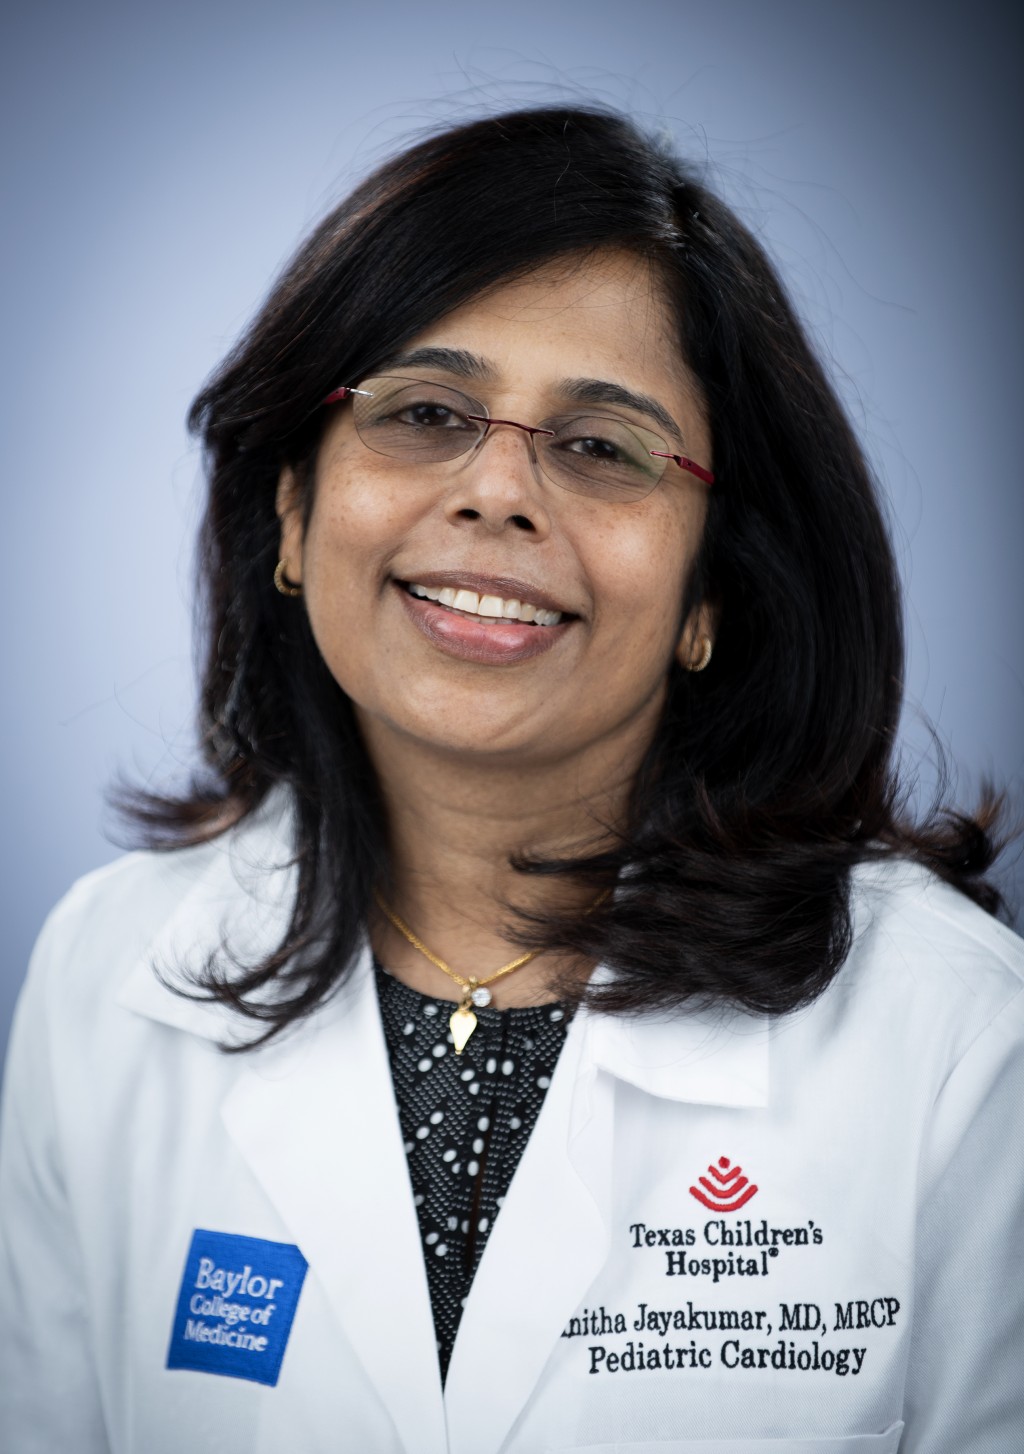 K. Anitha Jayakumar, MD, MRCP